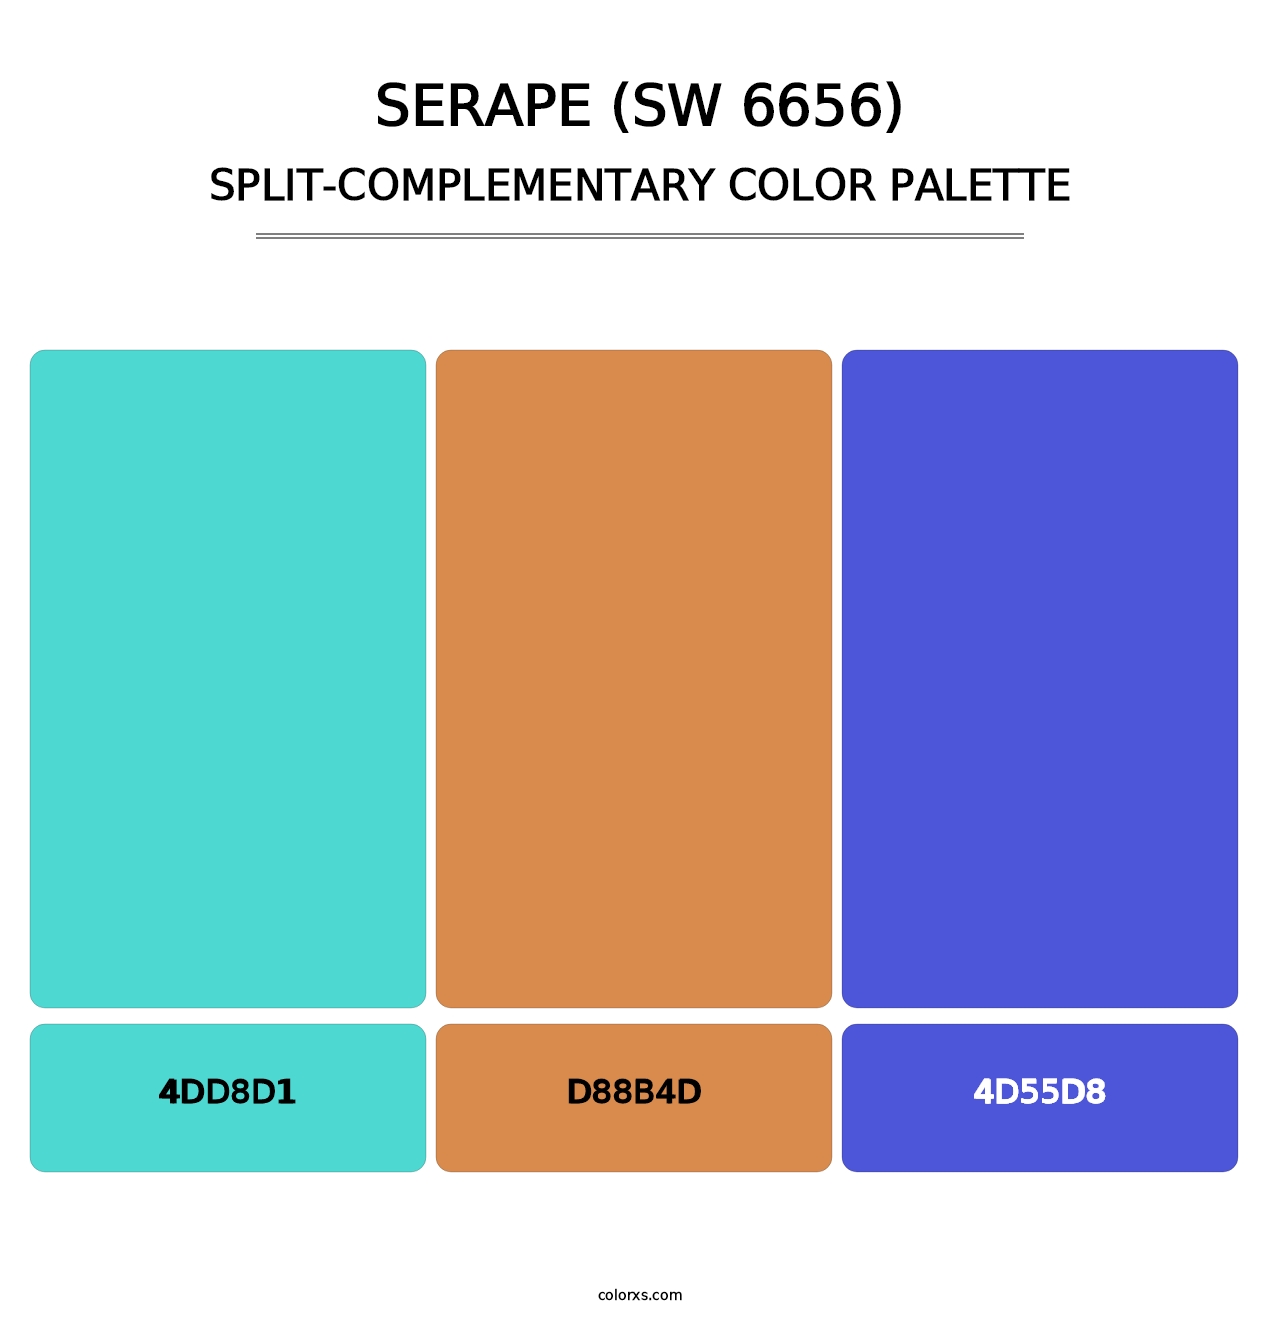 Serape (SW 6656) - Split-Complementary Color Palette